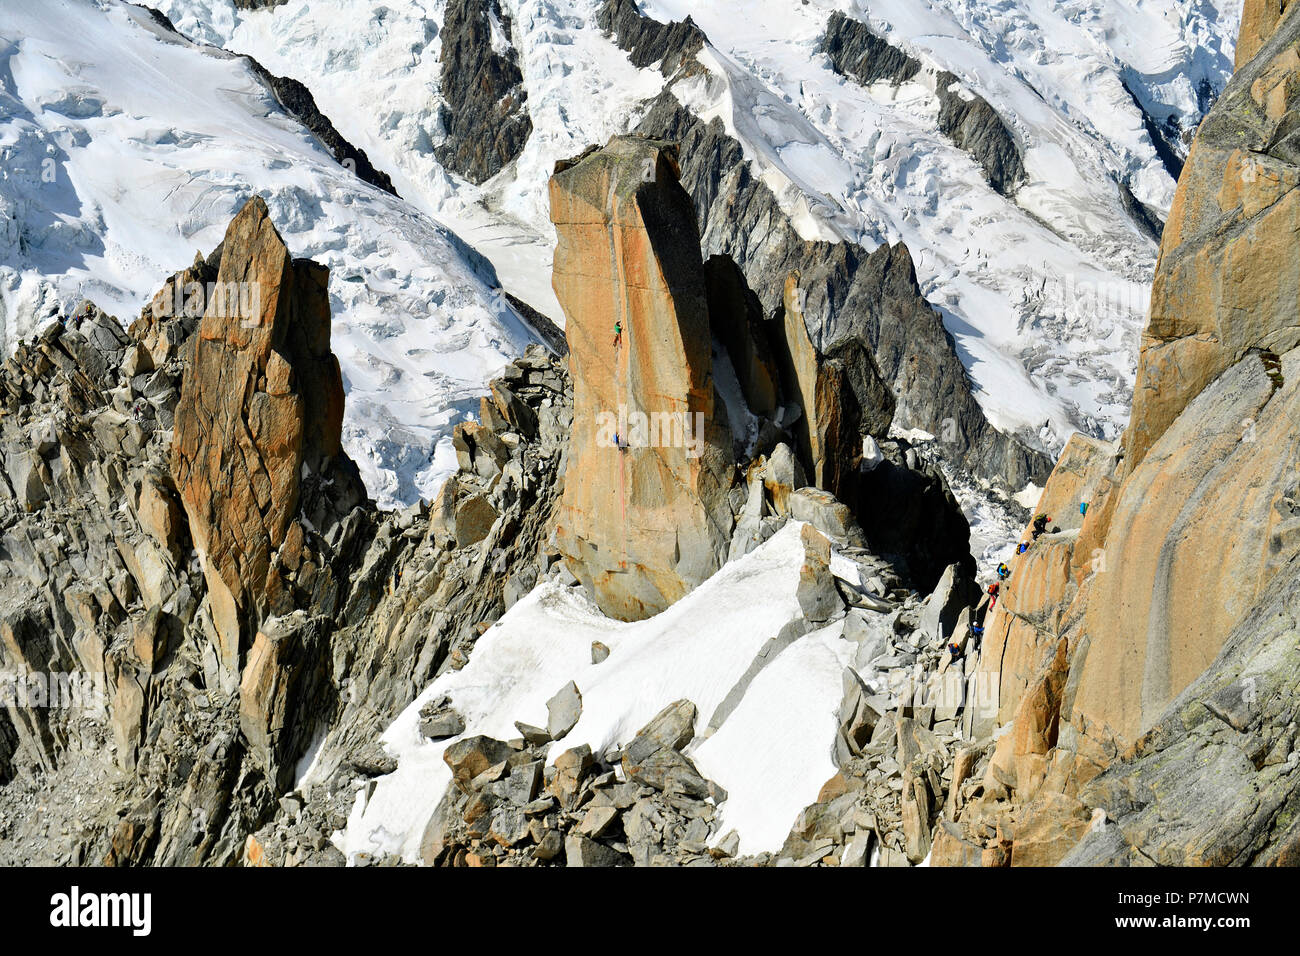 Francia, Alta Saboya, Chamonix Mont Blanc, alpinistas en la cresta de la Aiguille du Midi (3848m), cordillera de Mont-Blanc Foto de stock